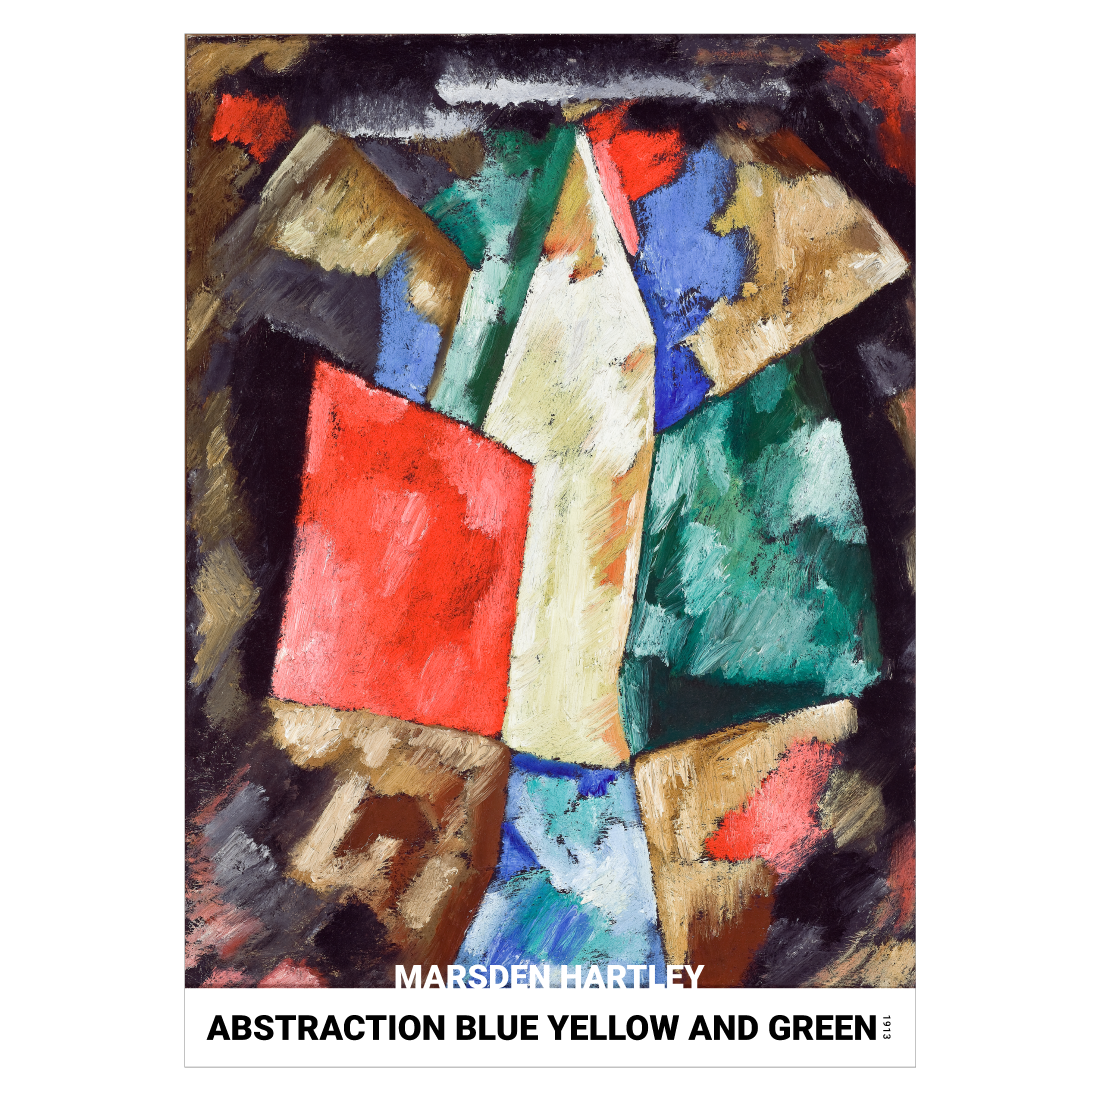 Kunstplakat med Marsden Hartley "Abstraction blue yellow and green"